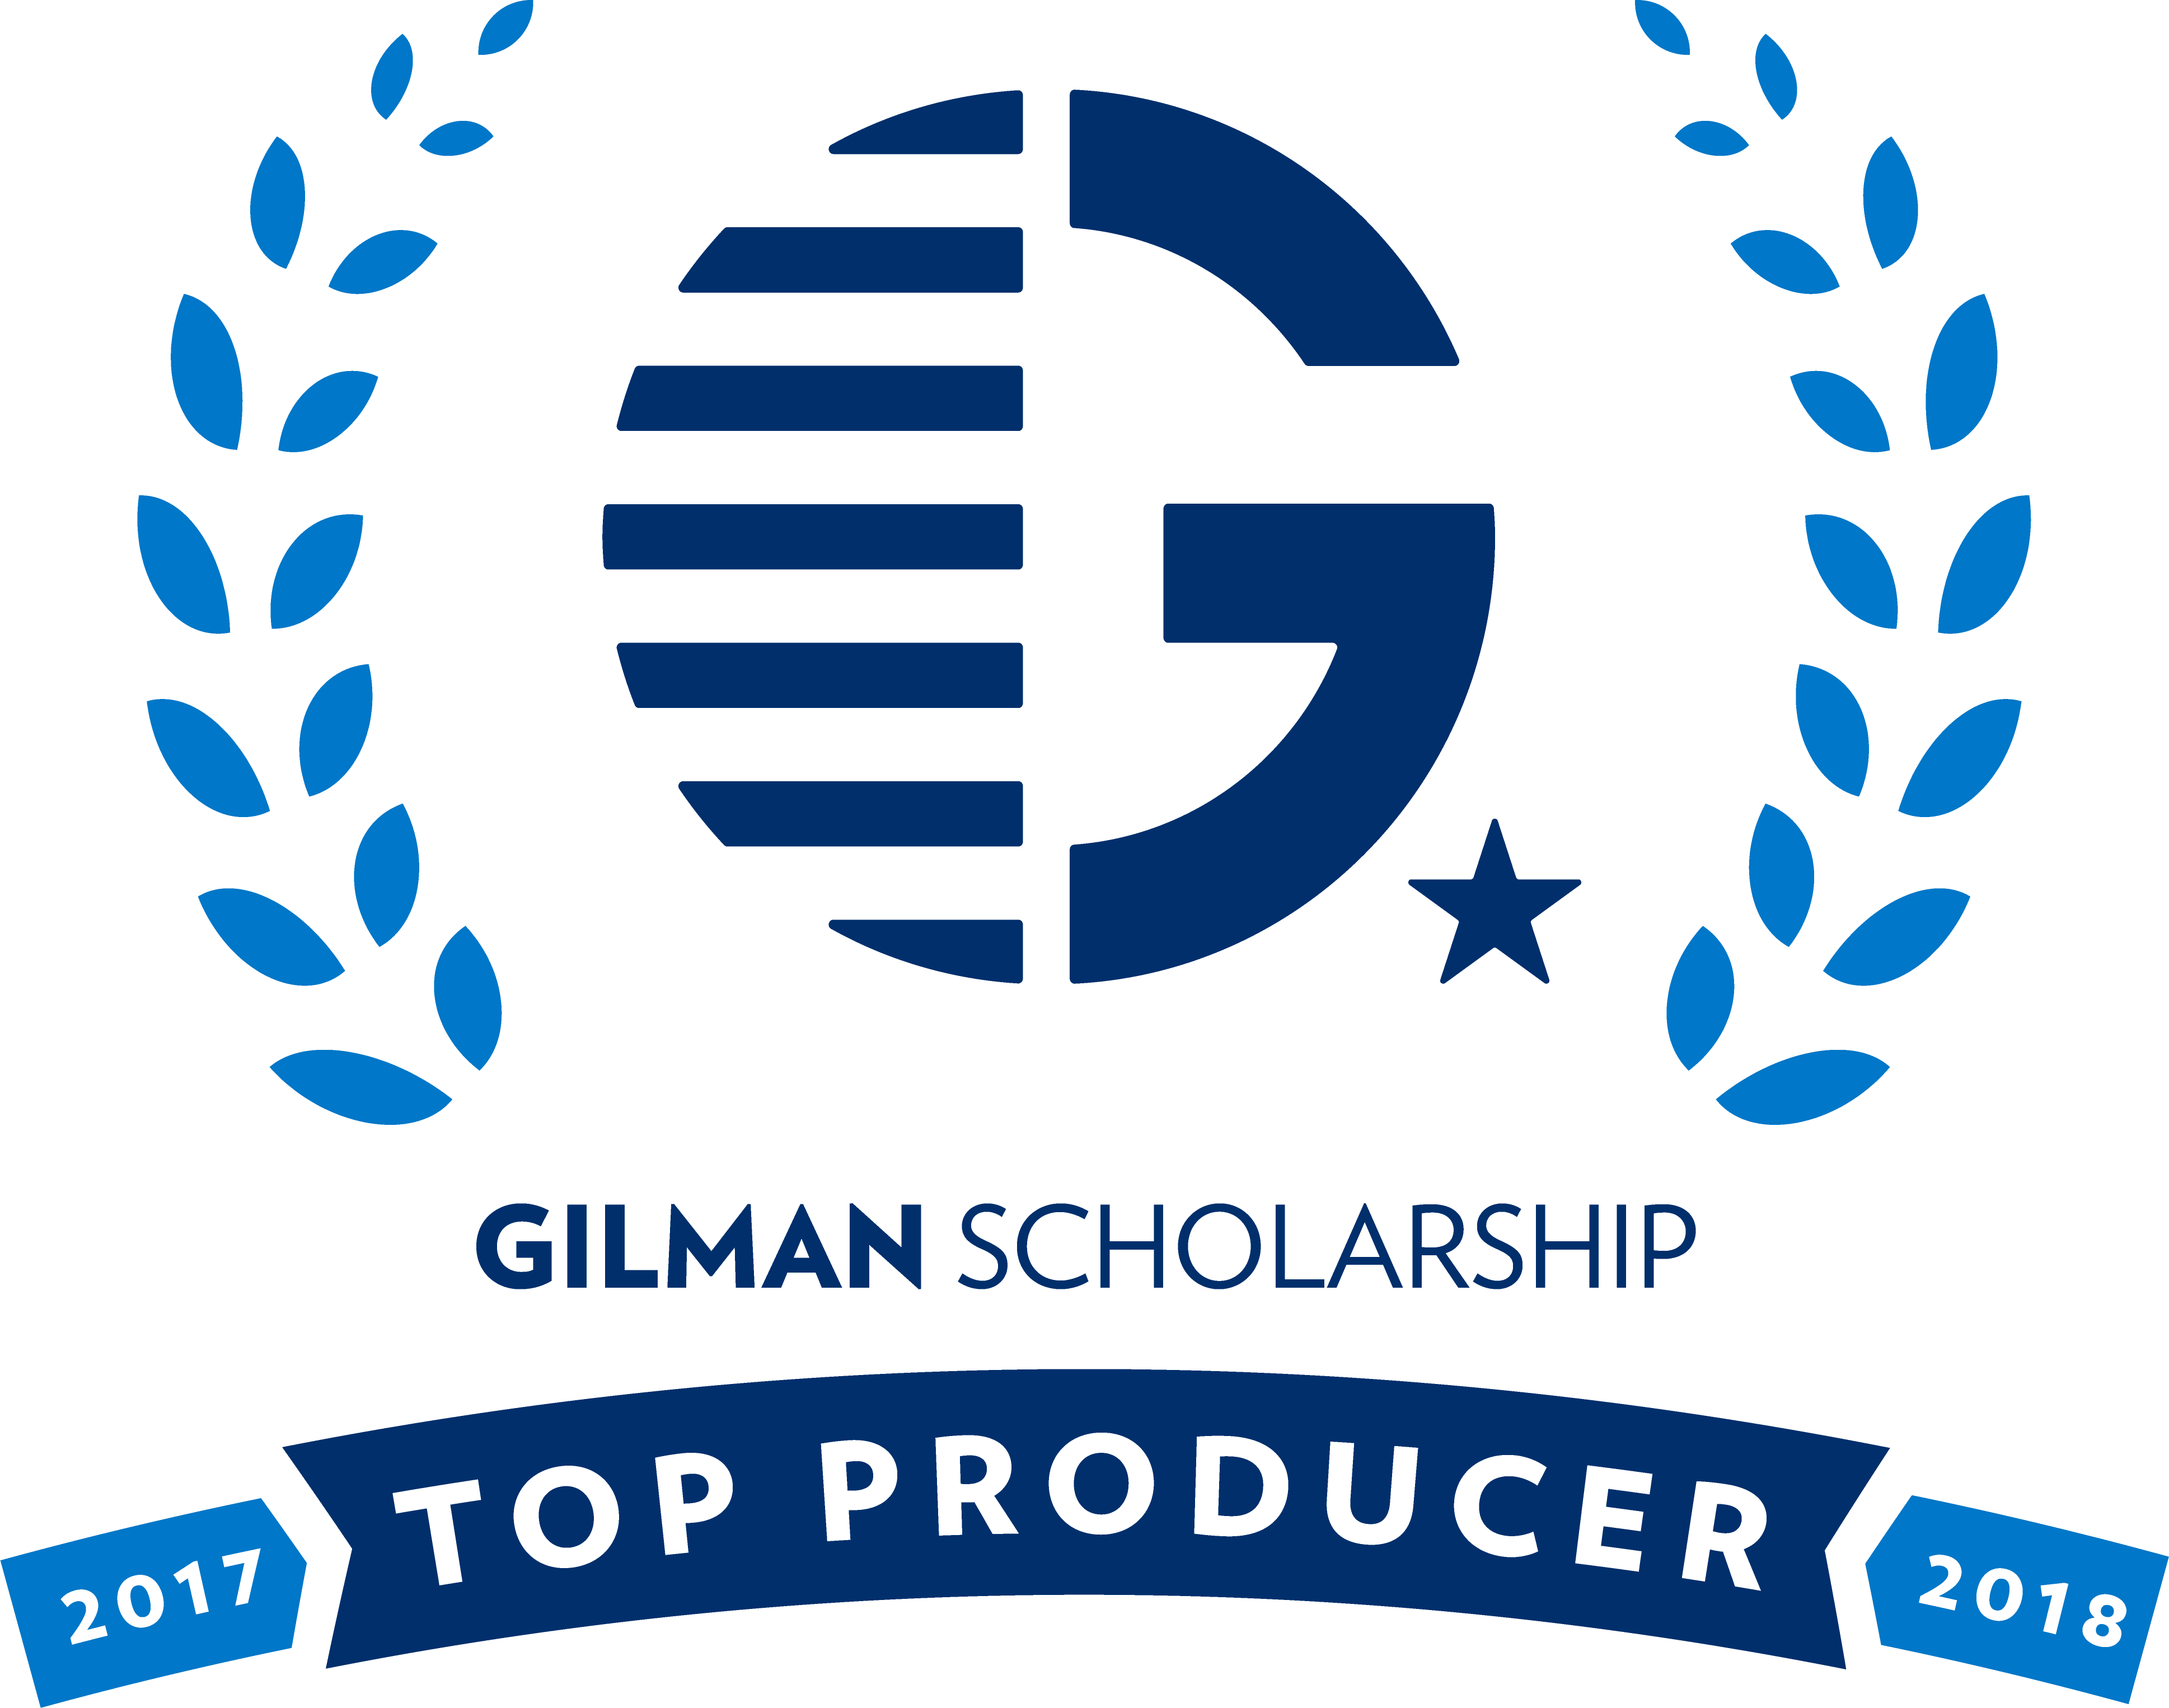 Gilman Top Producer 2017-2018